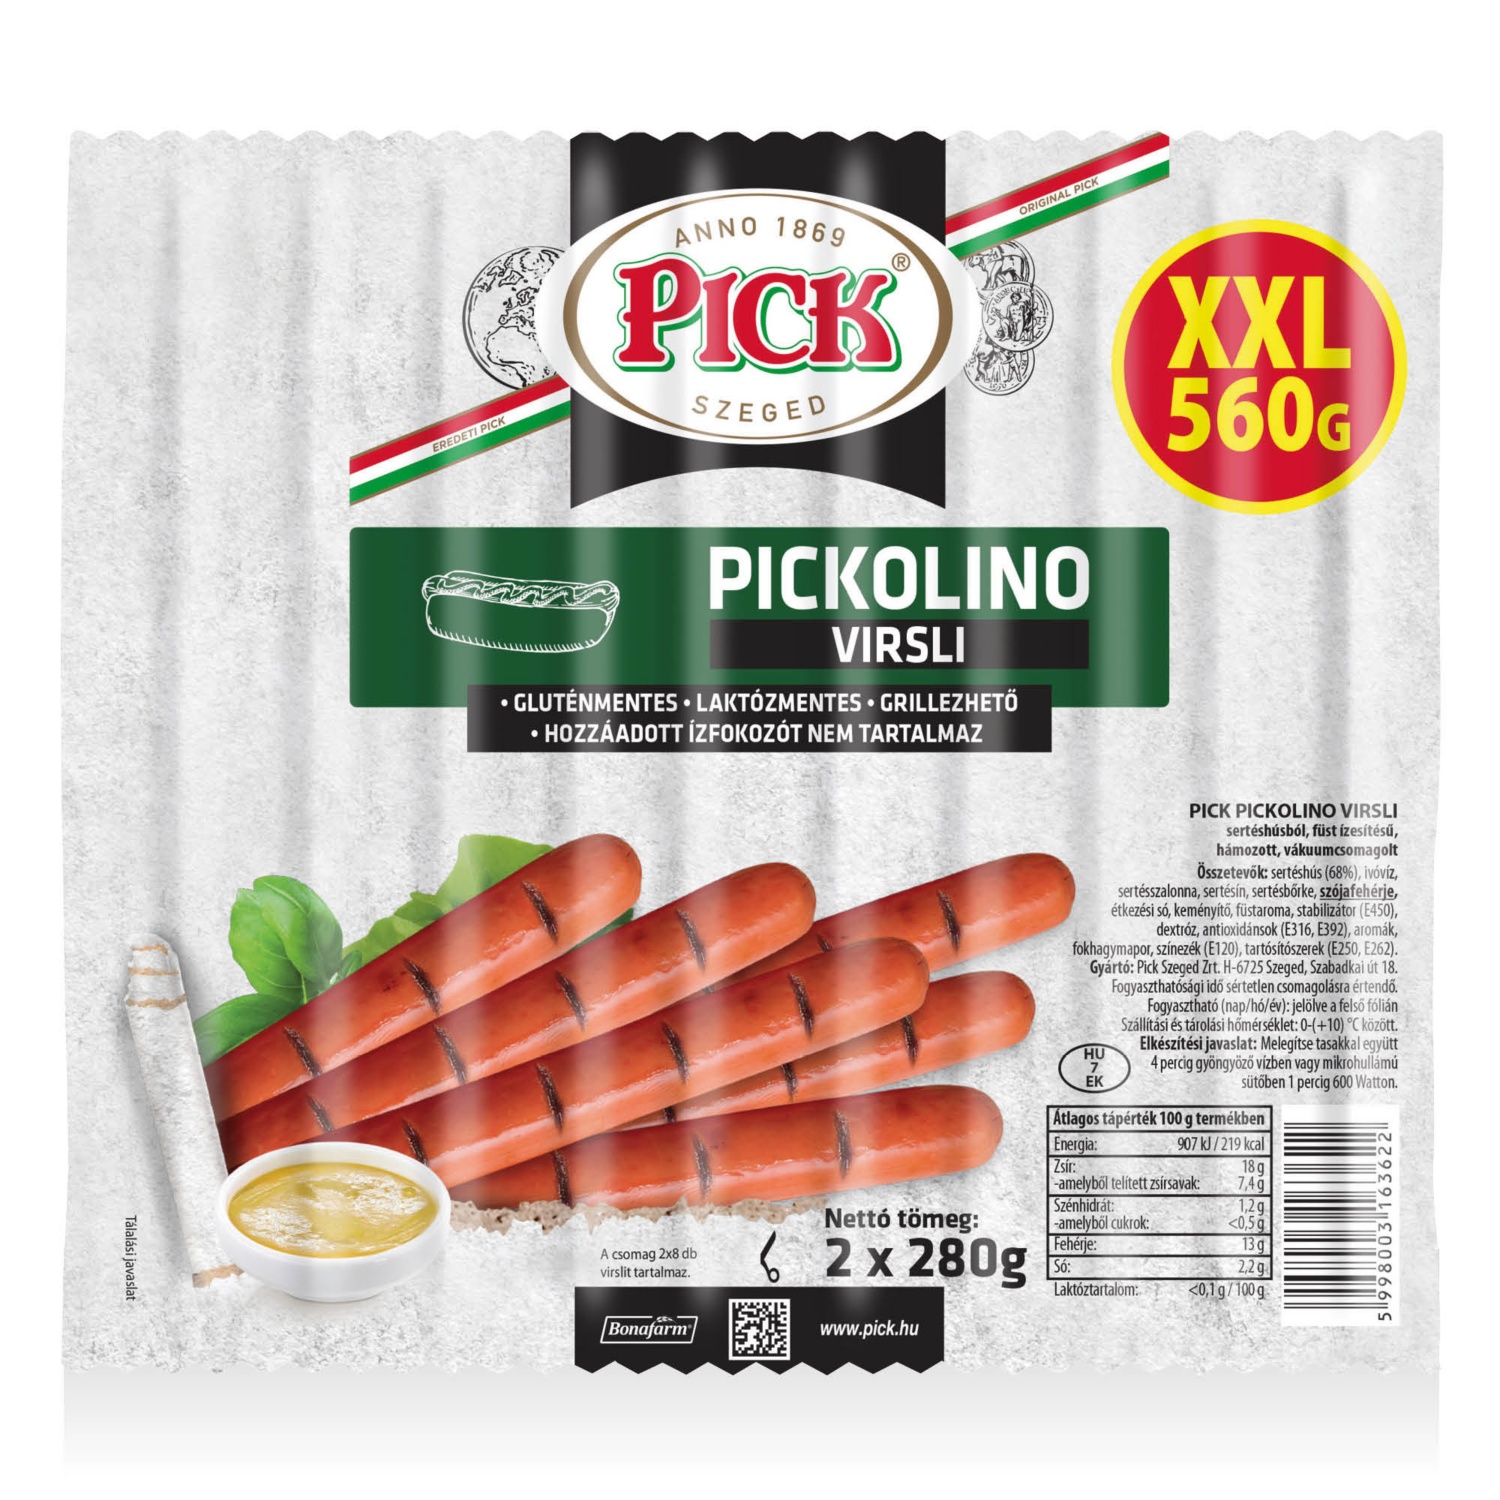 PICK Pickolino virsli 560 g